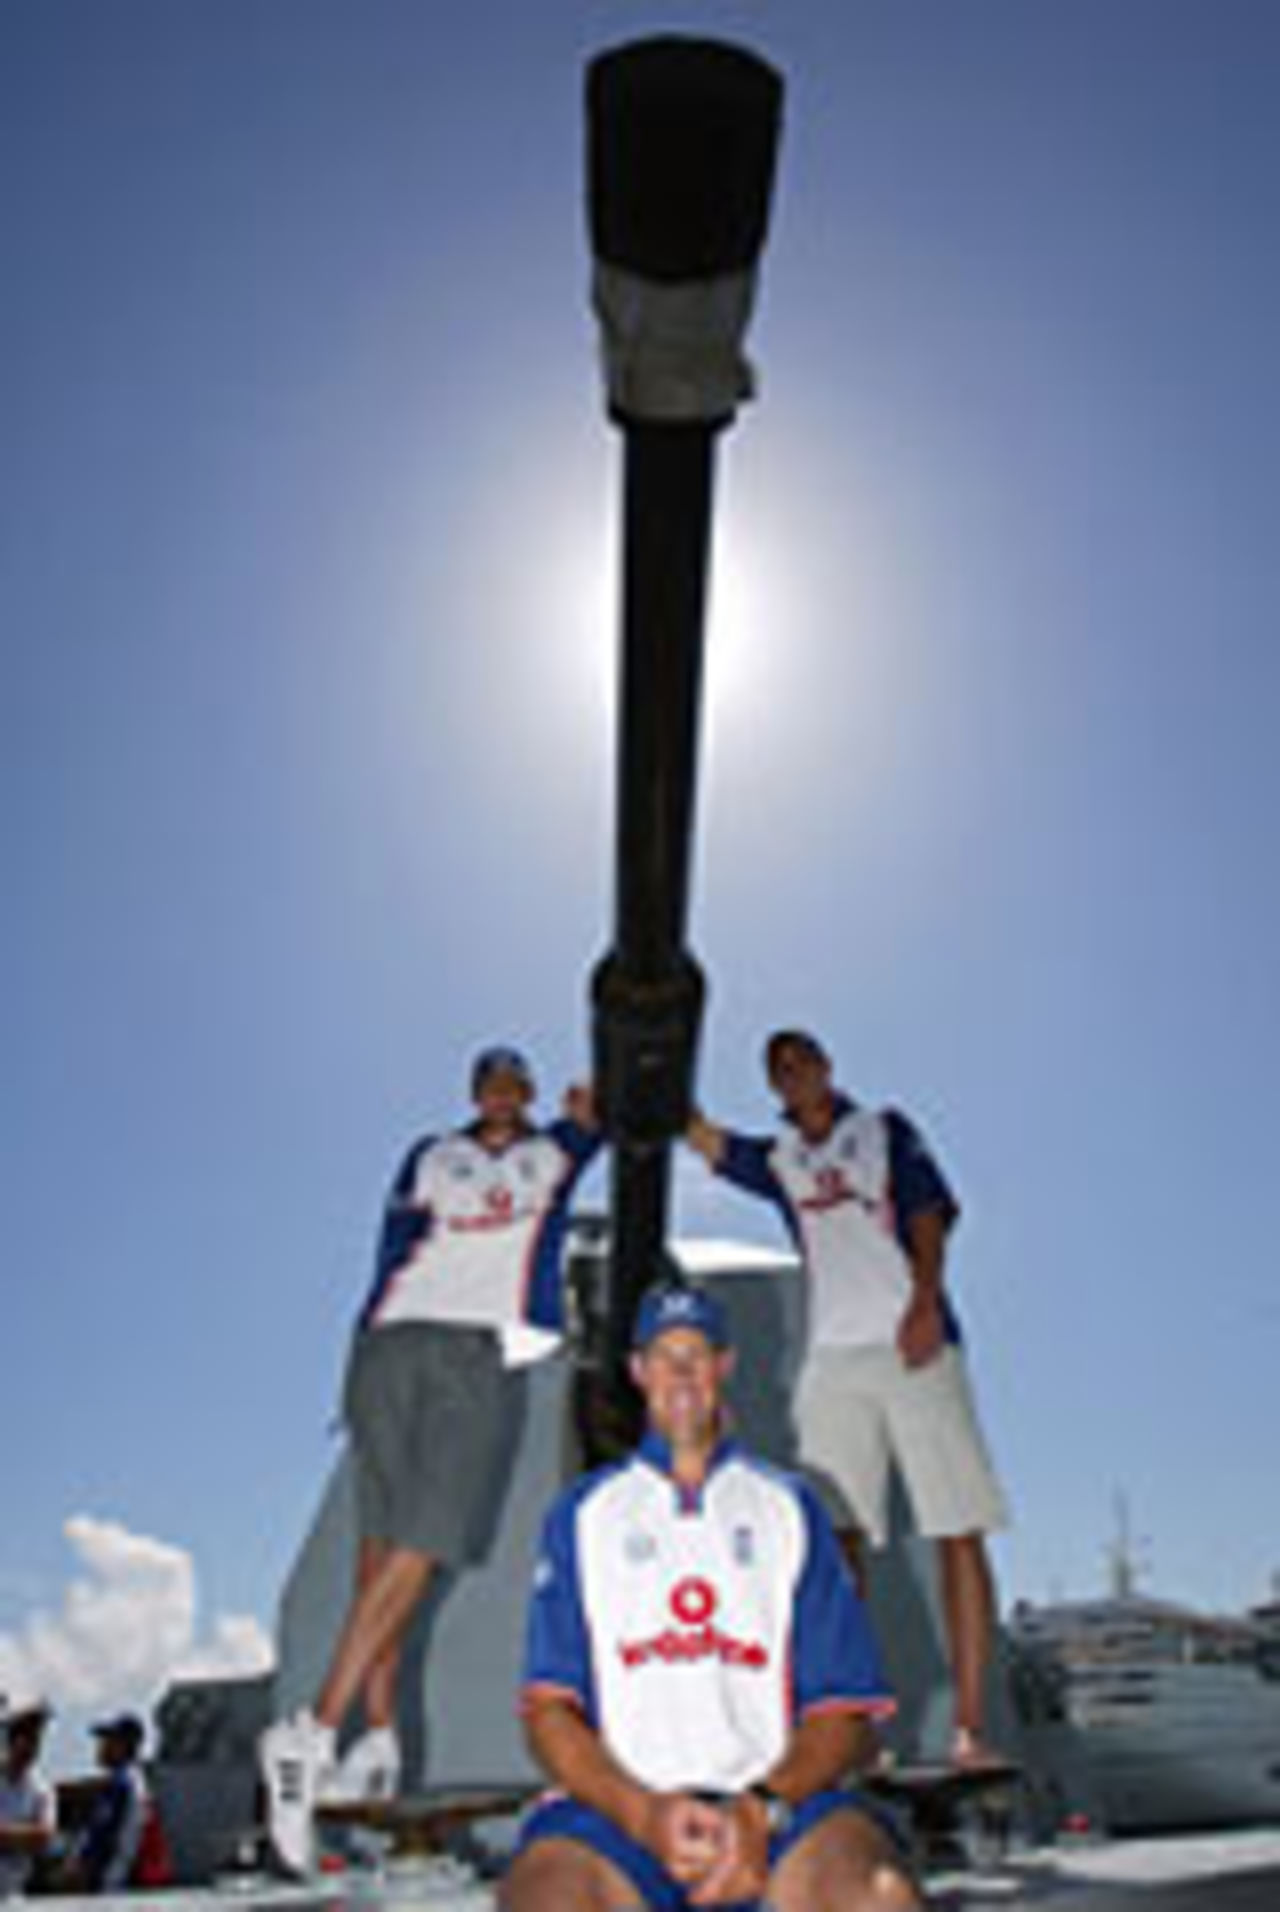 Marcus Trescothick, Simon Jones and Steve Harmison on board HMS Monmouth, Barbados, March 31, 2004